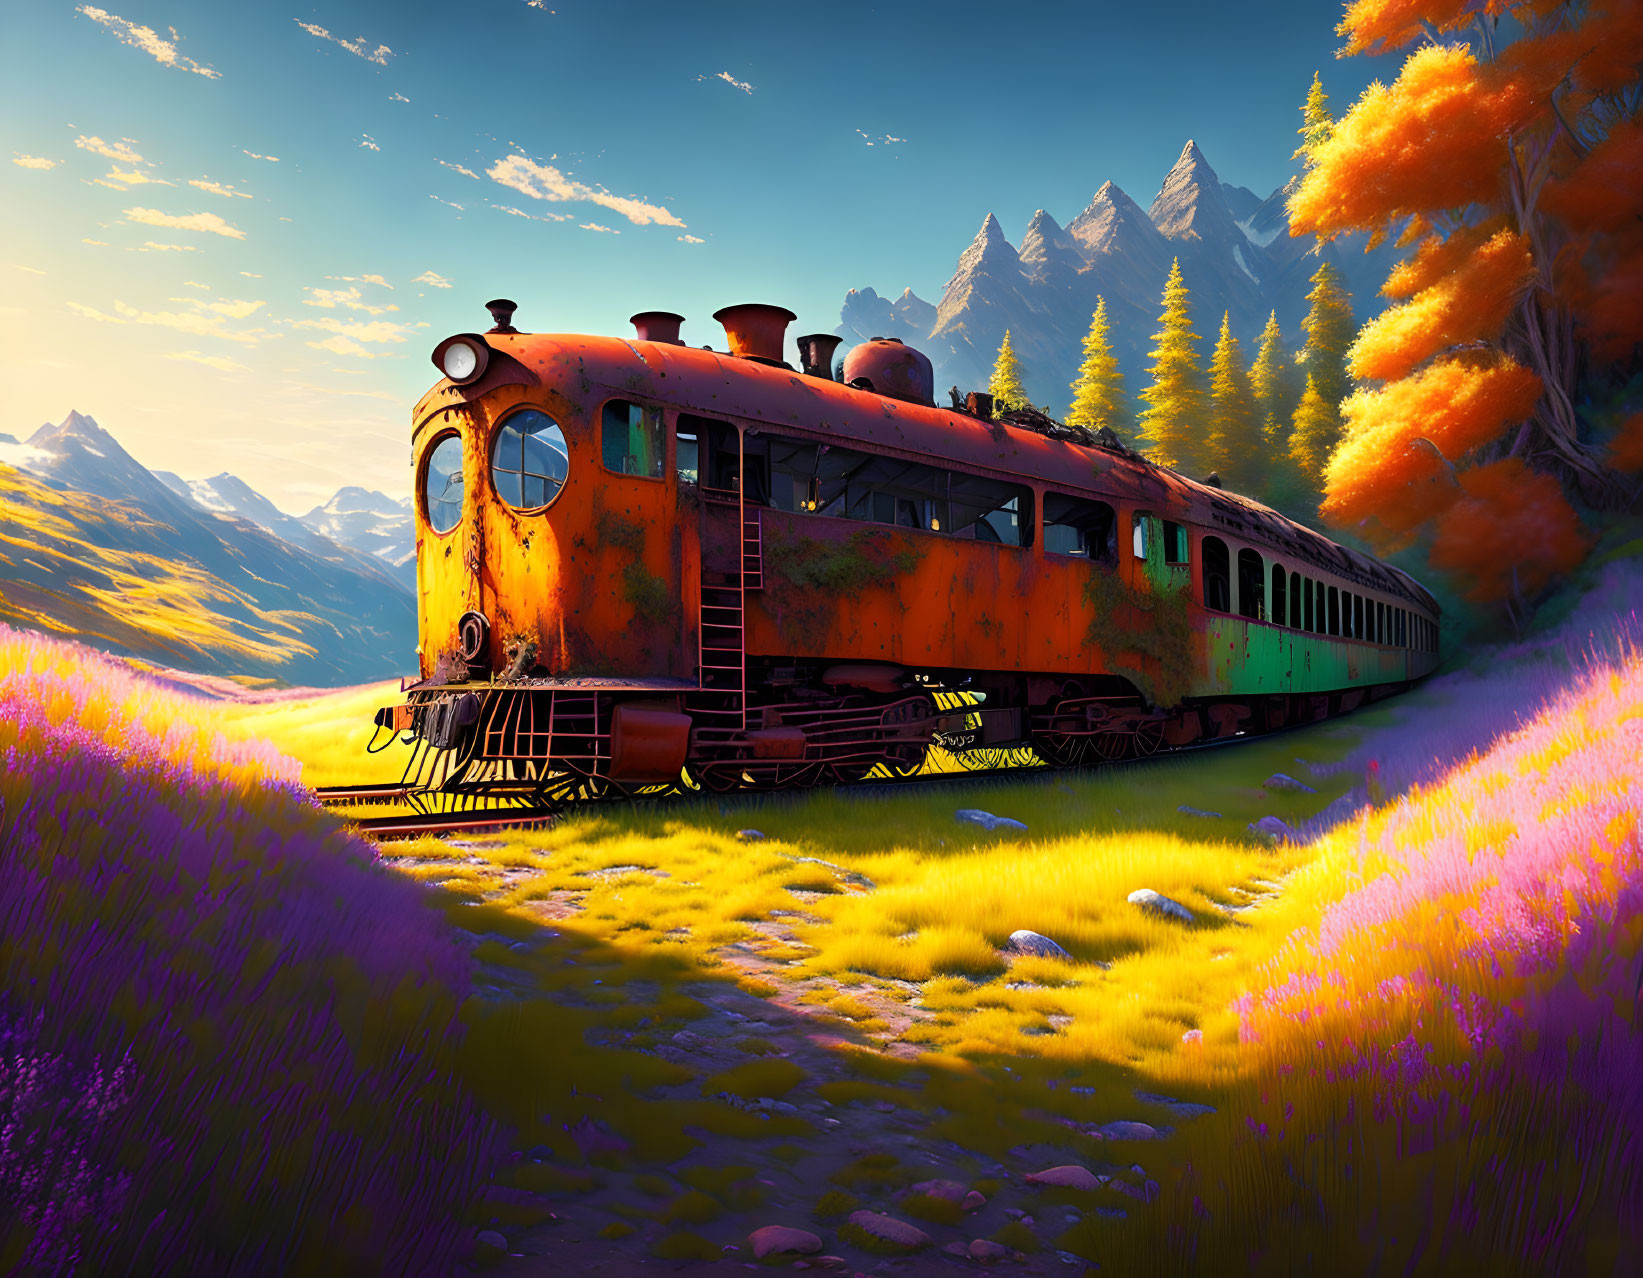 Rusted orange train in surreal landscape with purple foliage